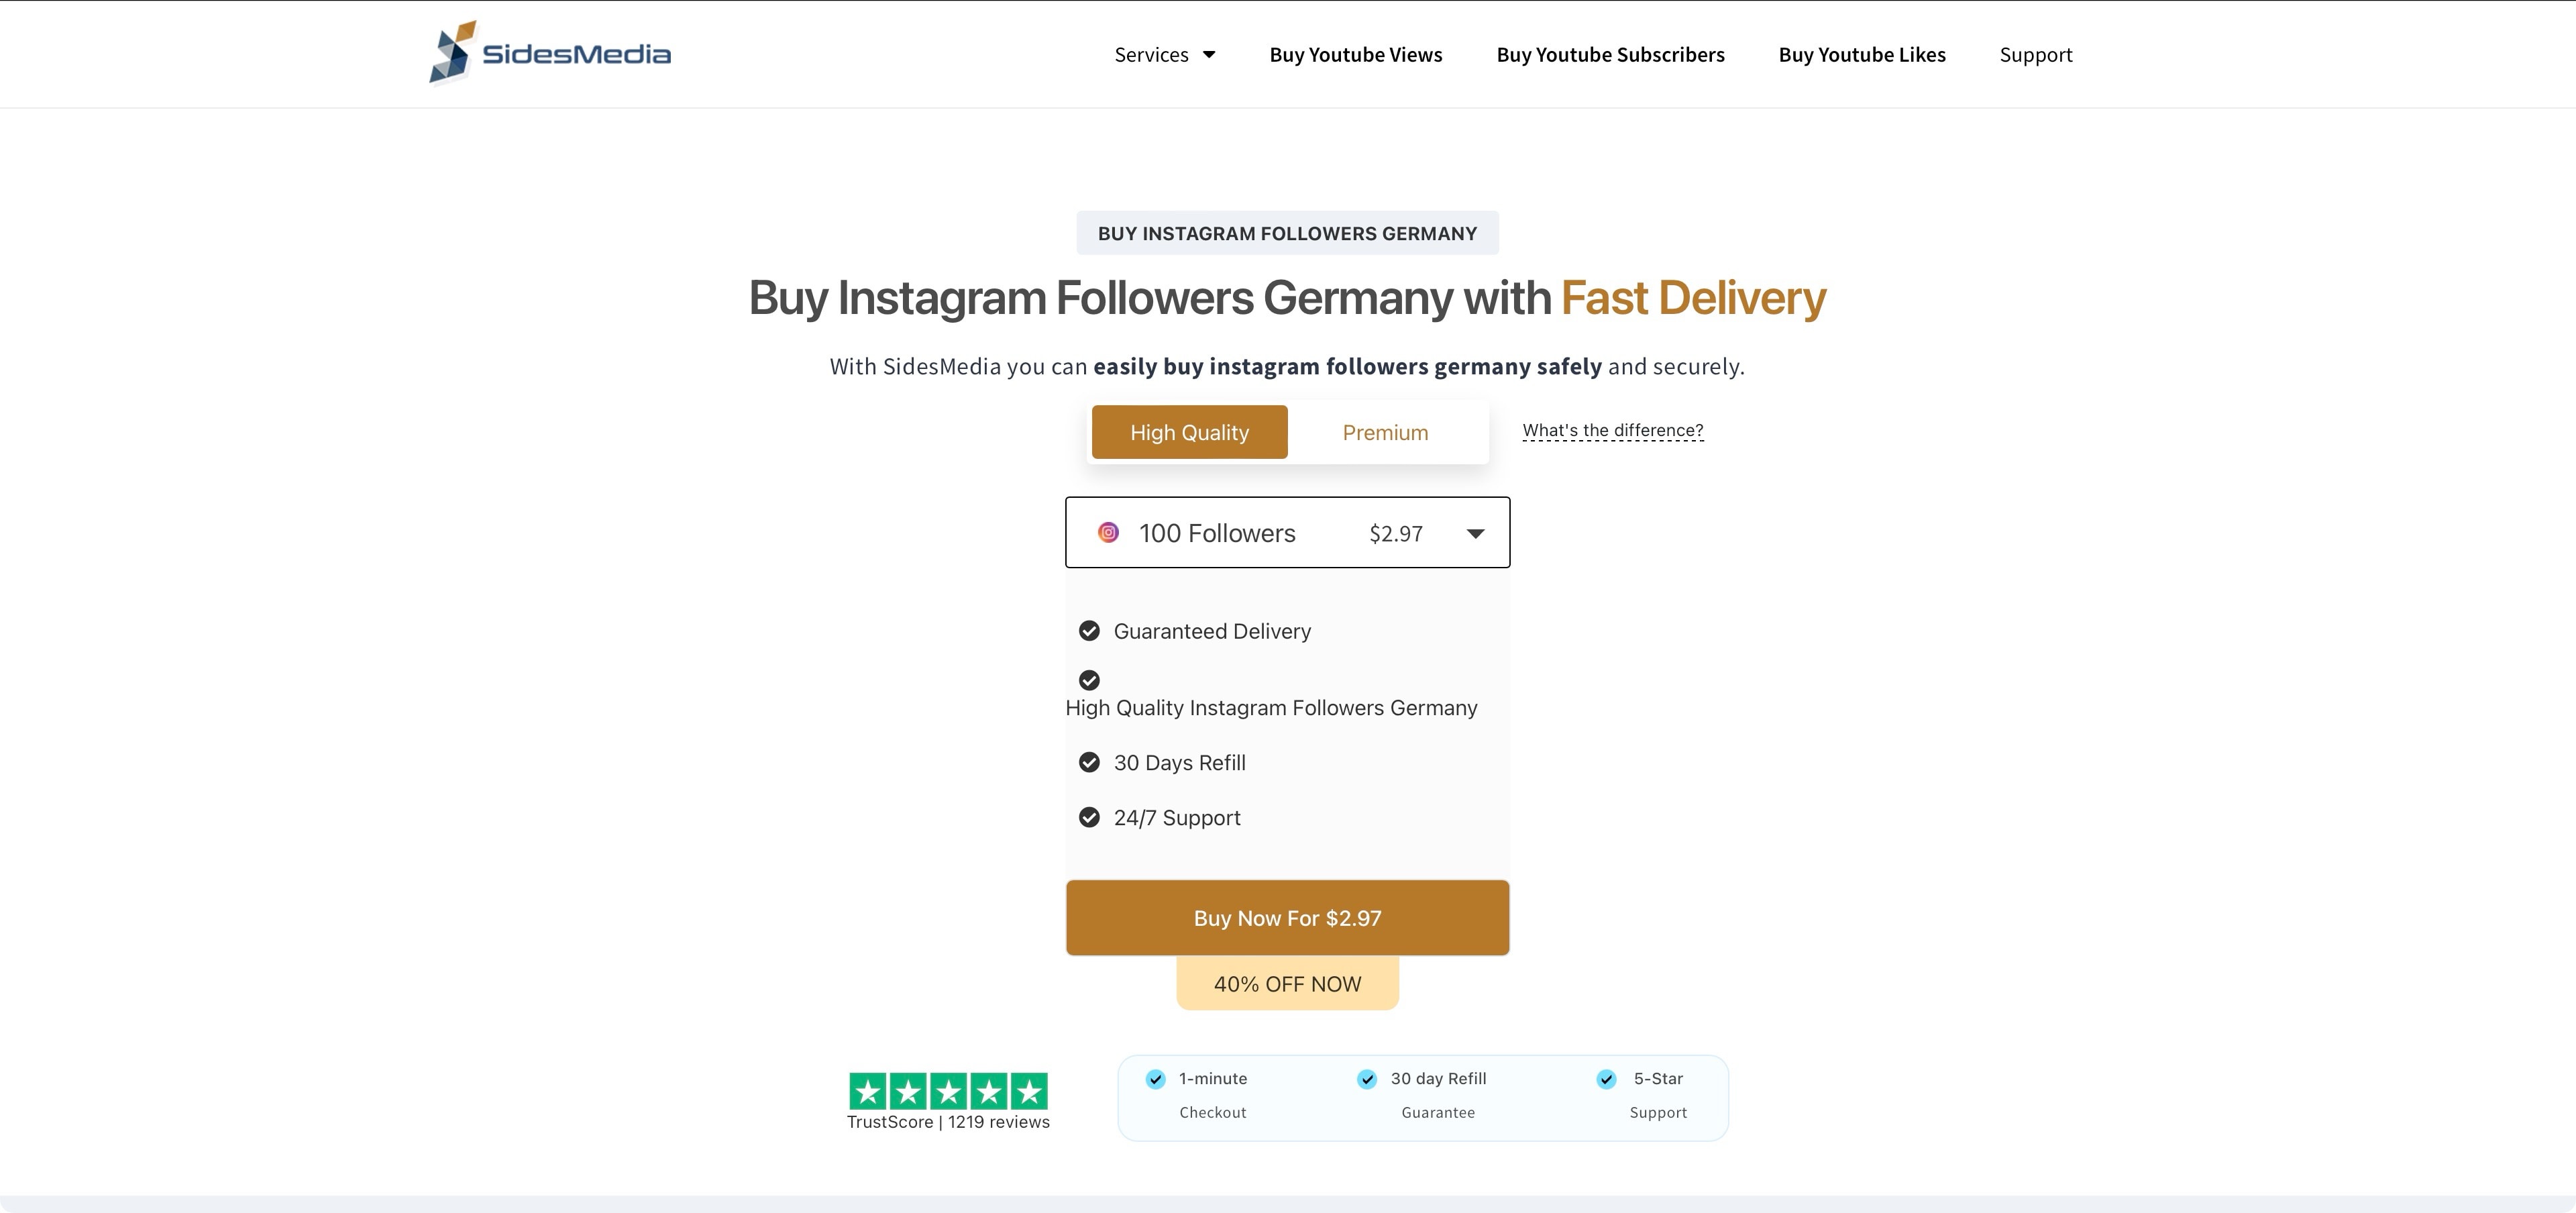 sidesmedia buy instagram followers germany page